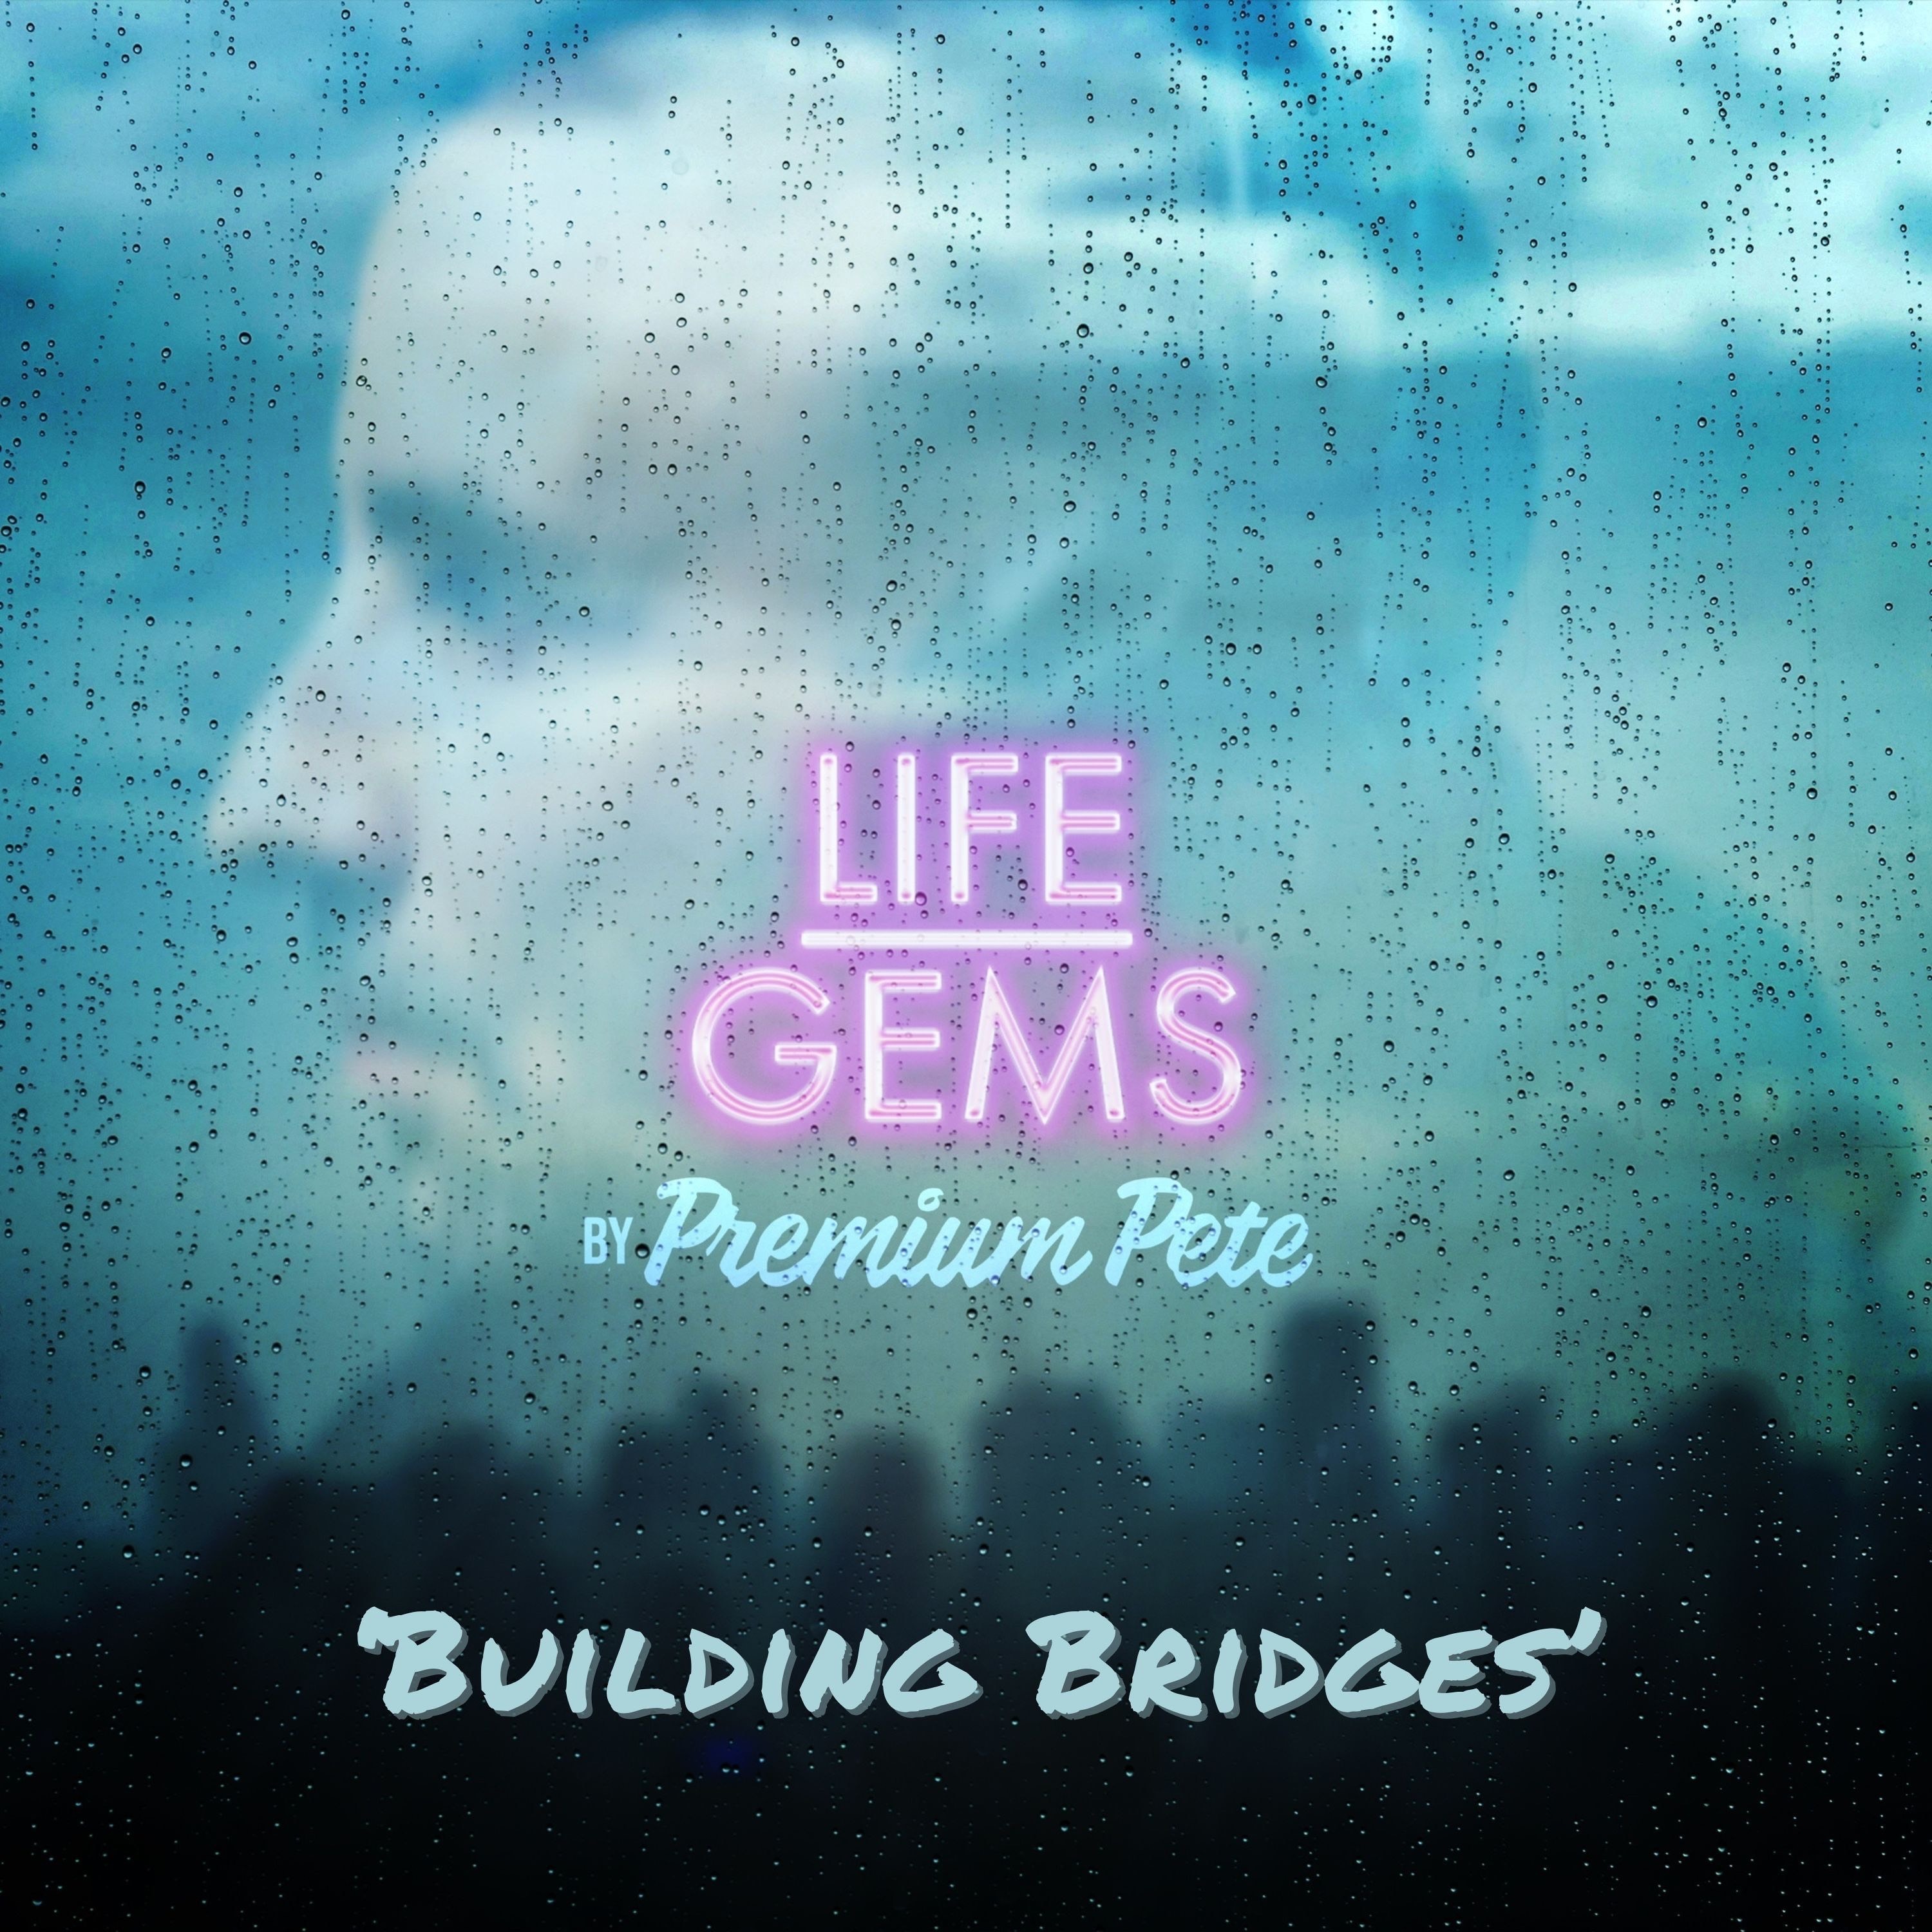 Life Gems ”Building Bridges”